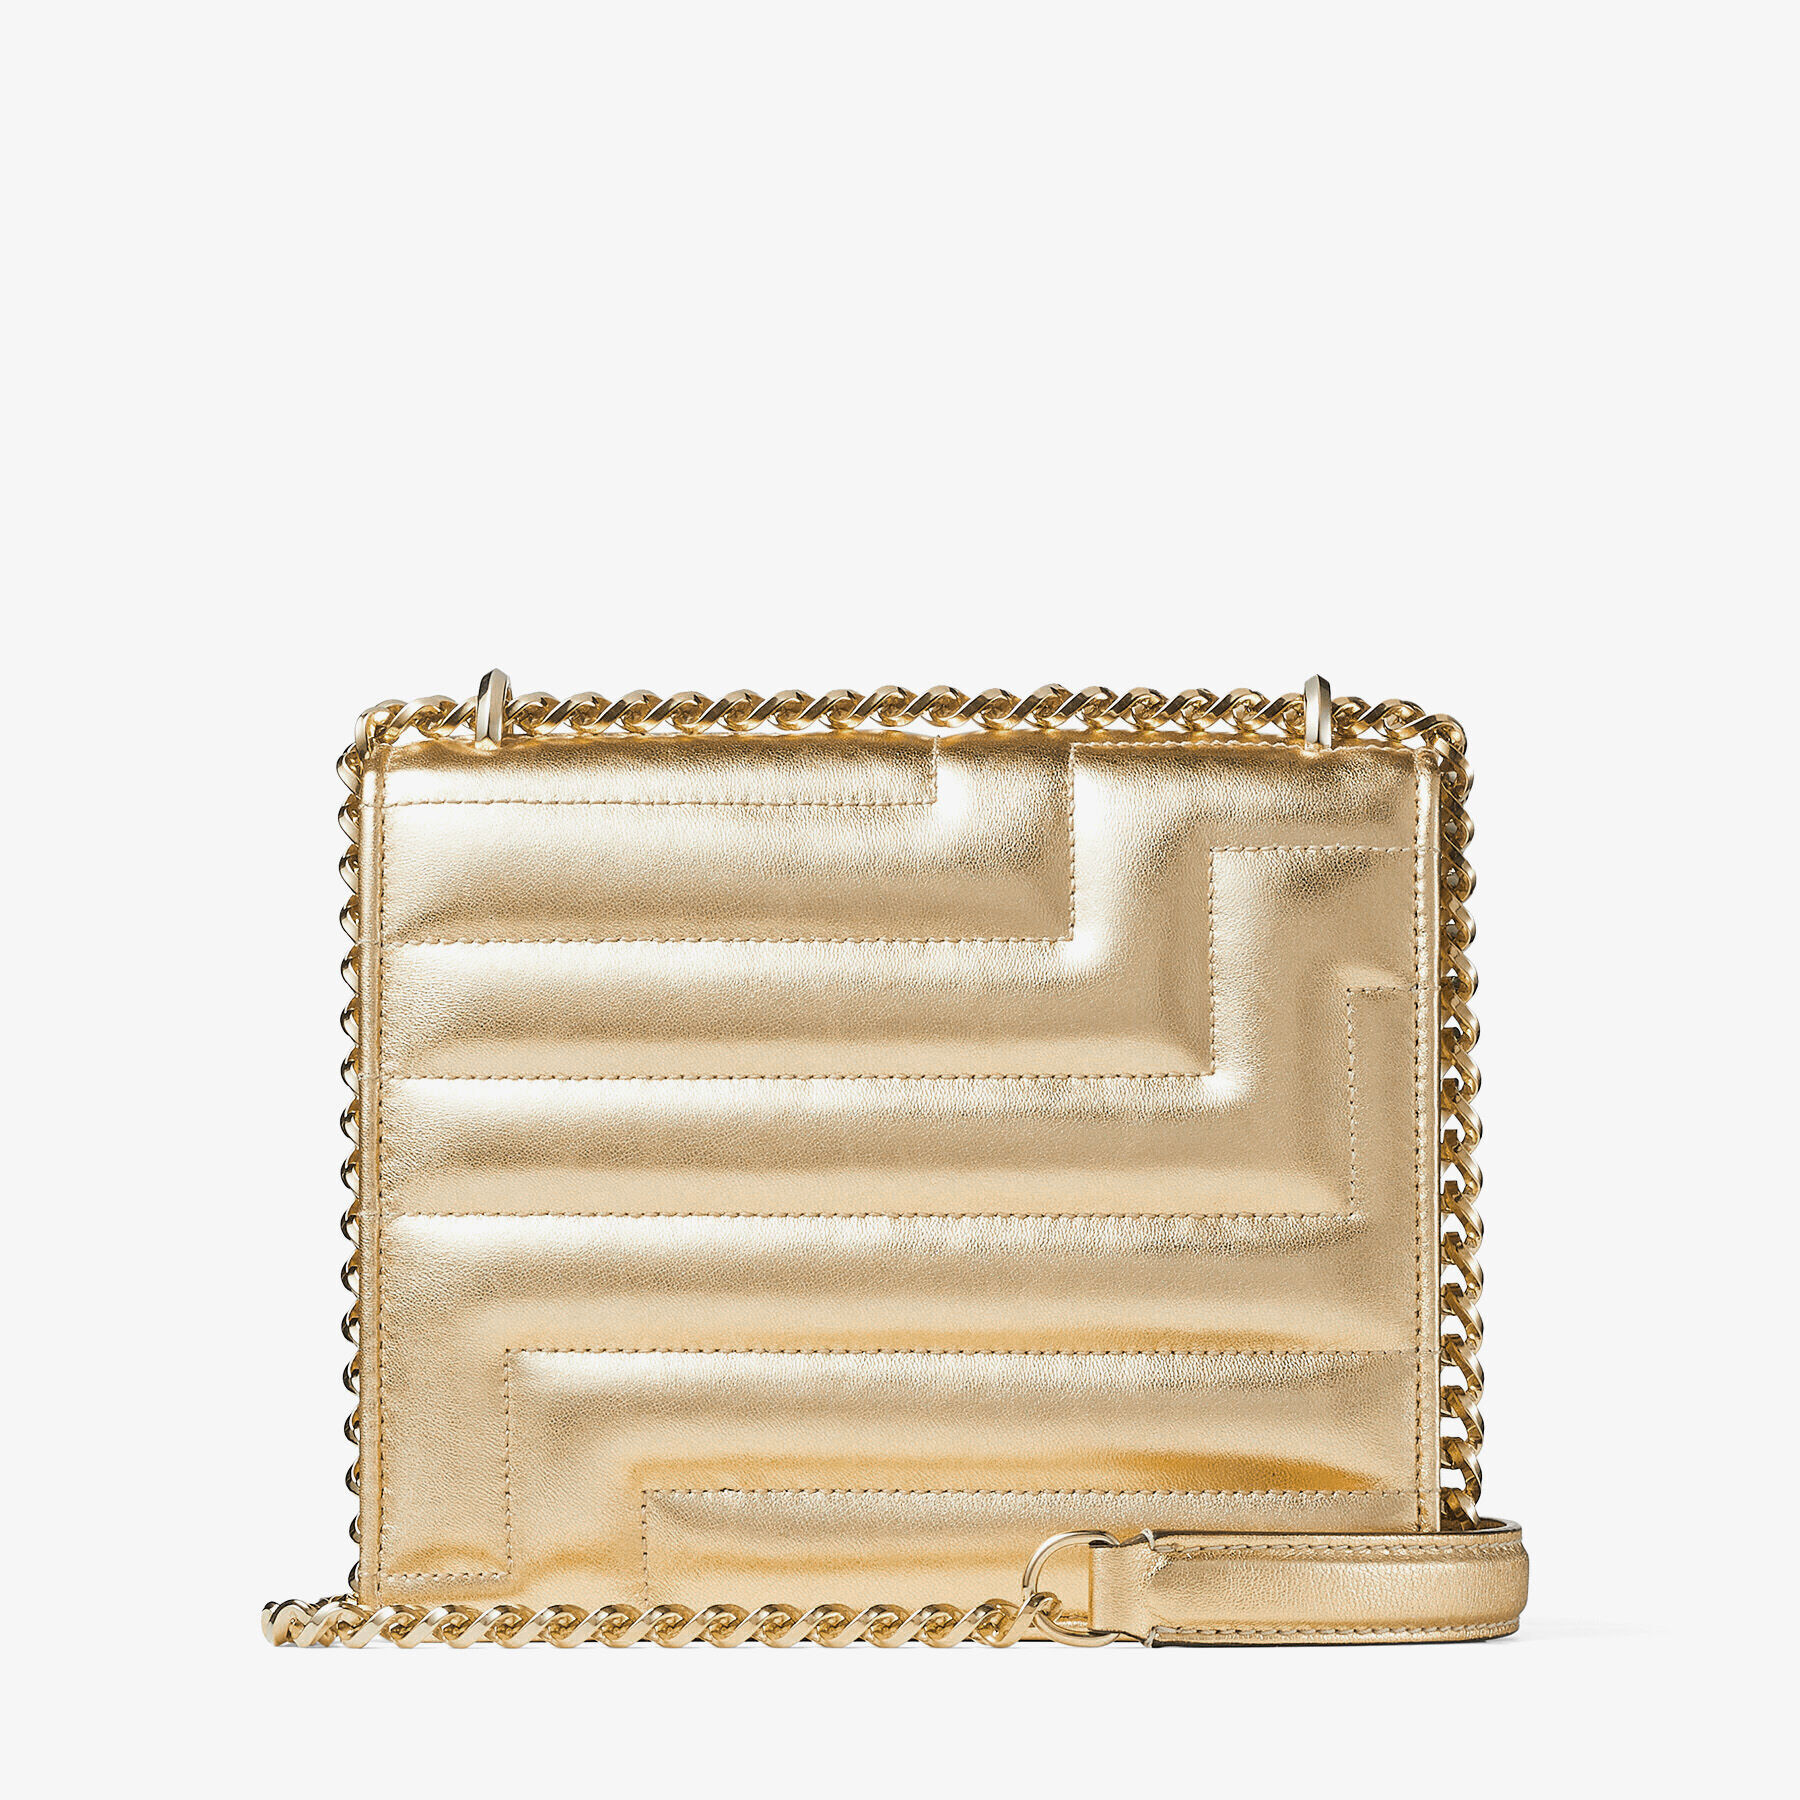 Gold Avenue Metallic Nappa Leather Bag with Light Gold JC Emblem